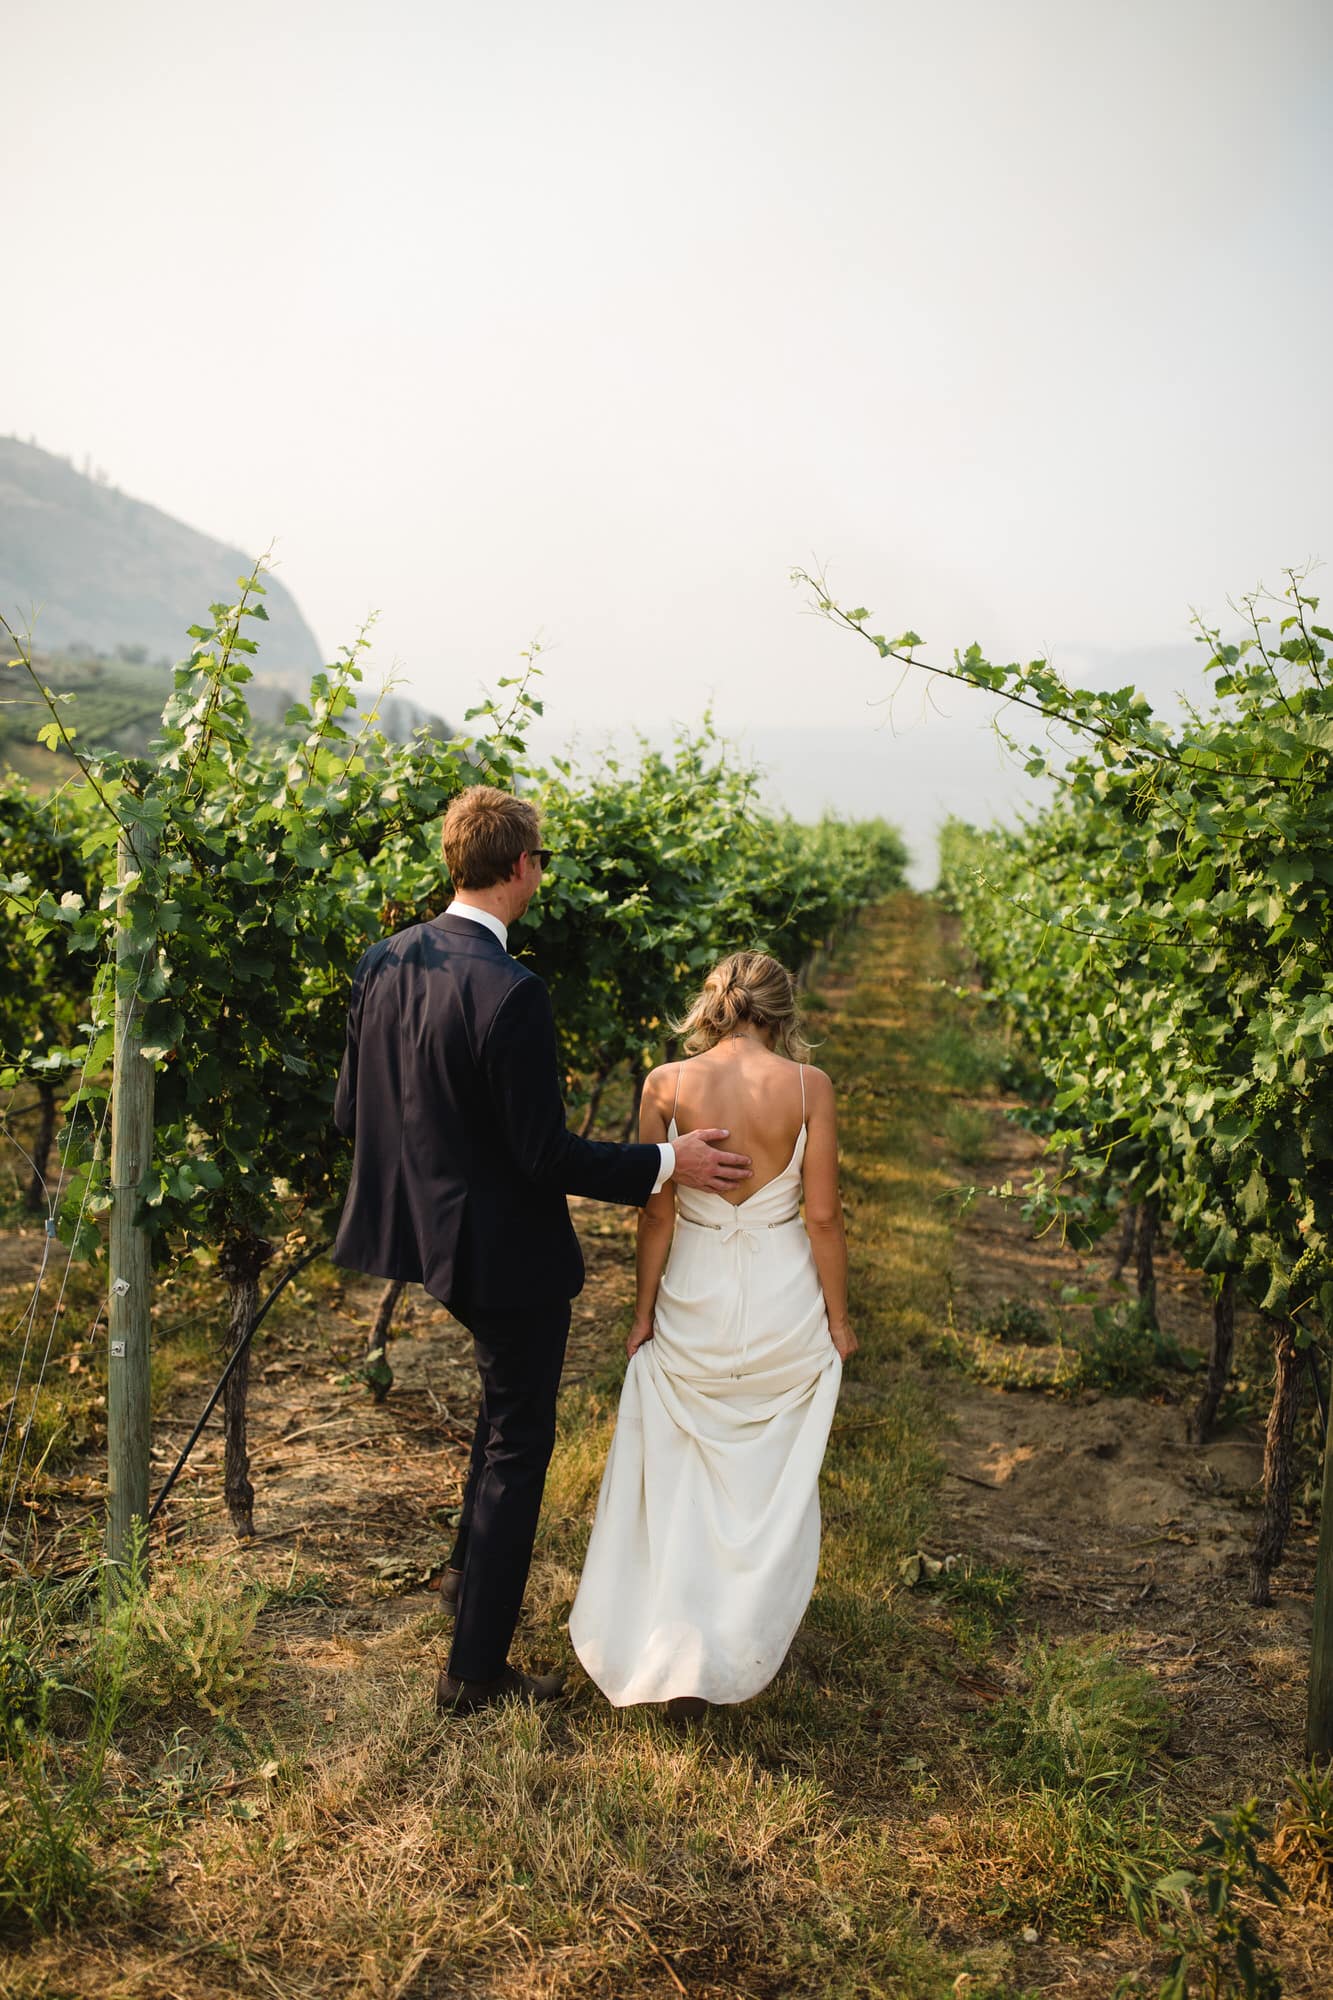 Bride and groom walk through the vineyard at Evolve Cellars Vineyard on Lake Okanagan, Summerland, BC. Destination wedding photographer Brent Calis.